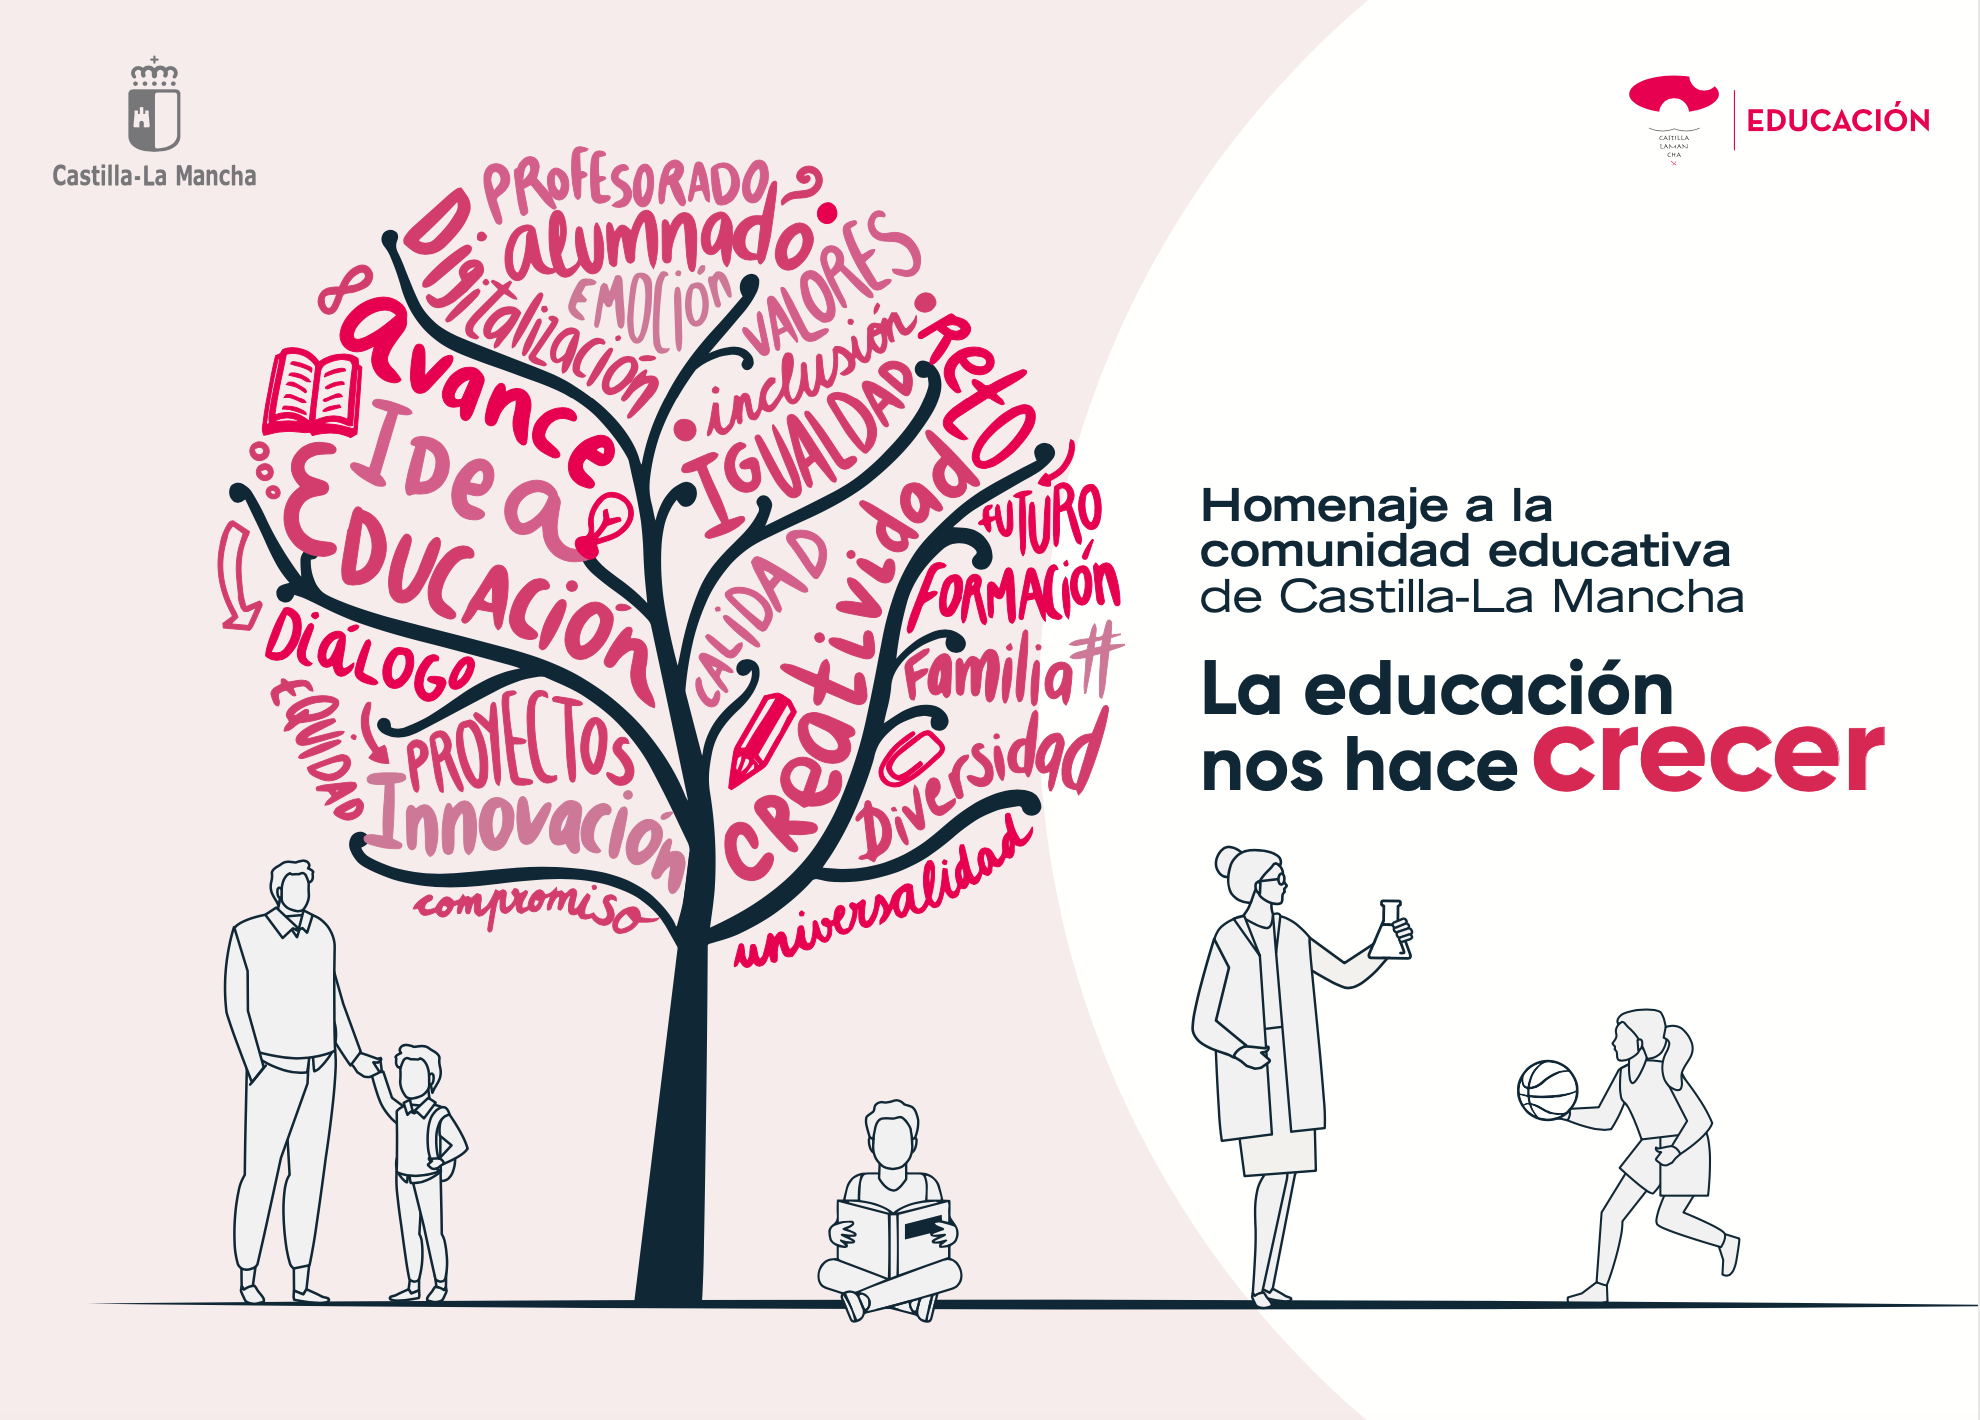 Homenaje a la comunidad educativa de Castilla-La Mancha 2021